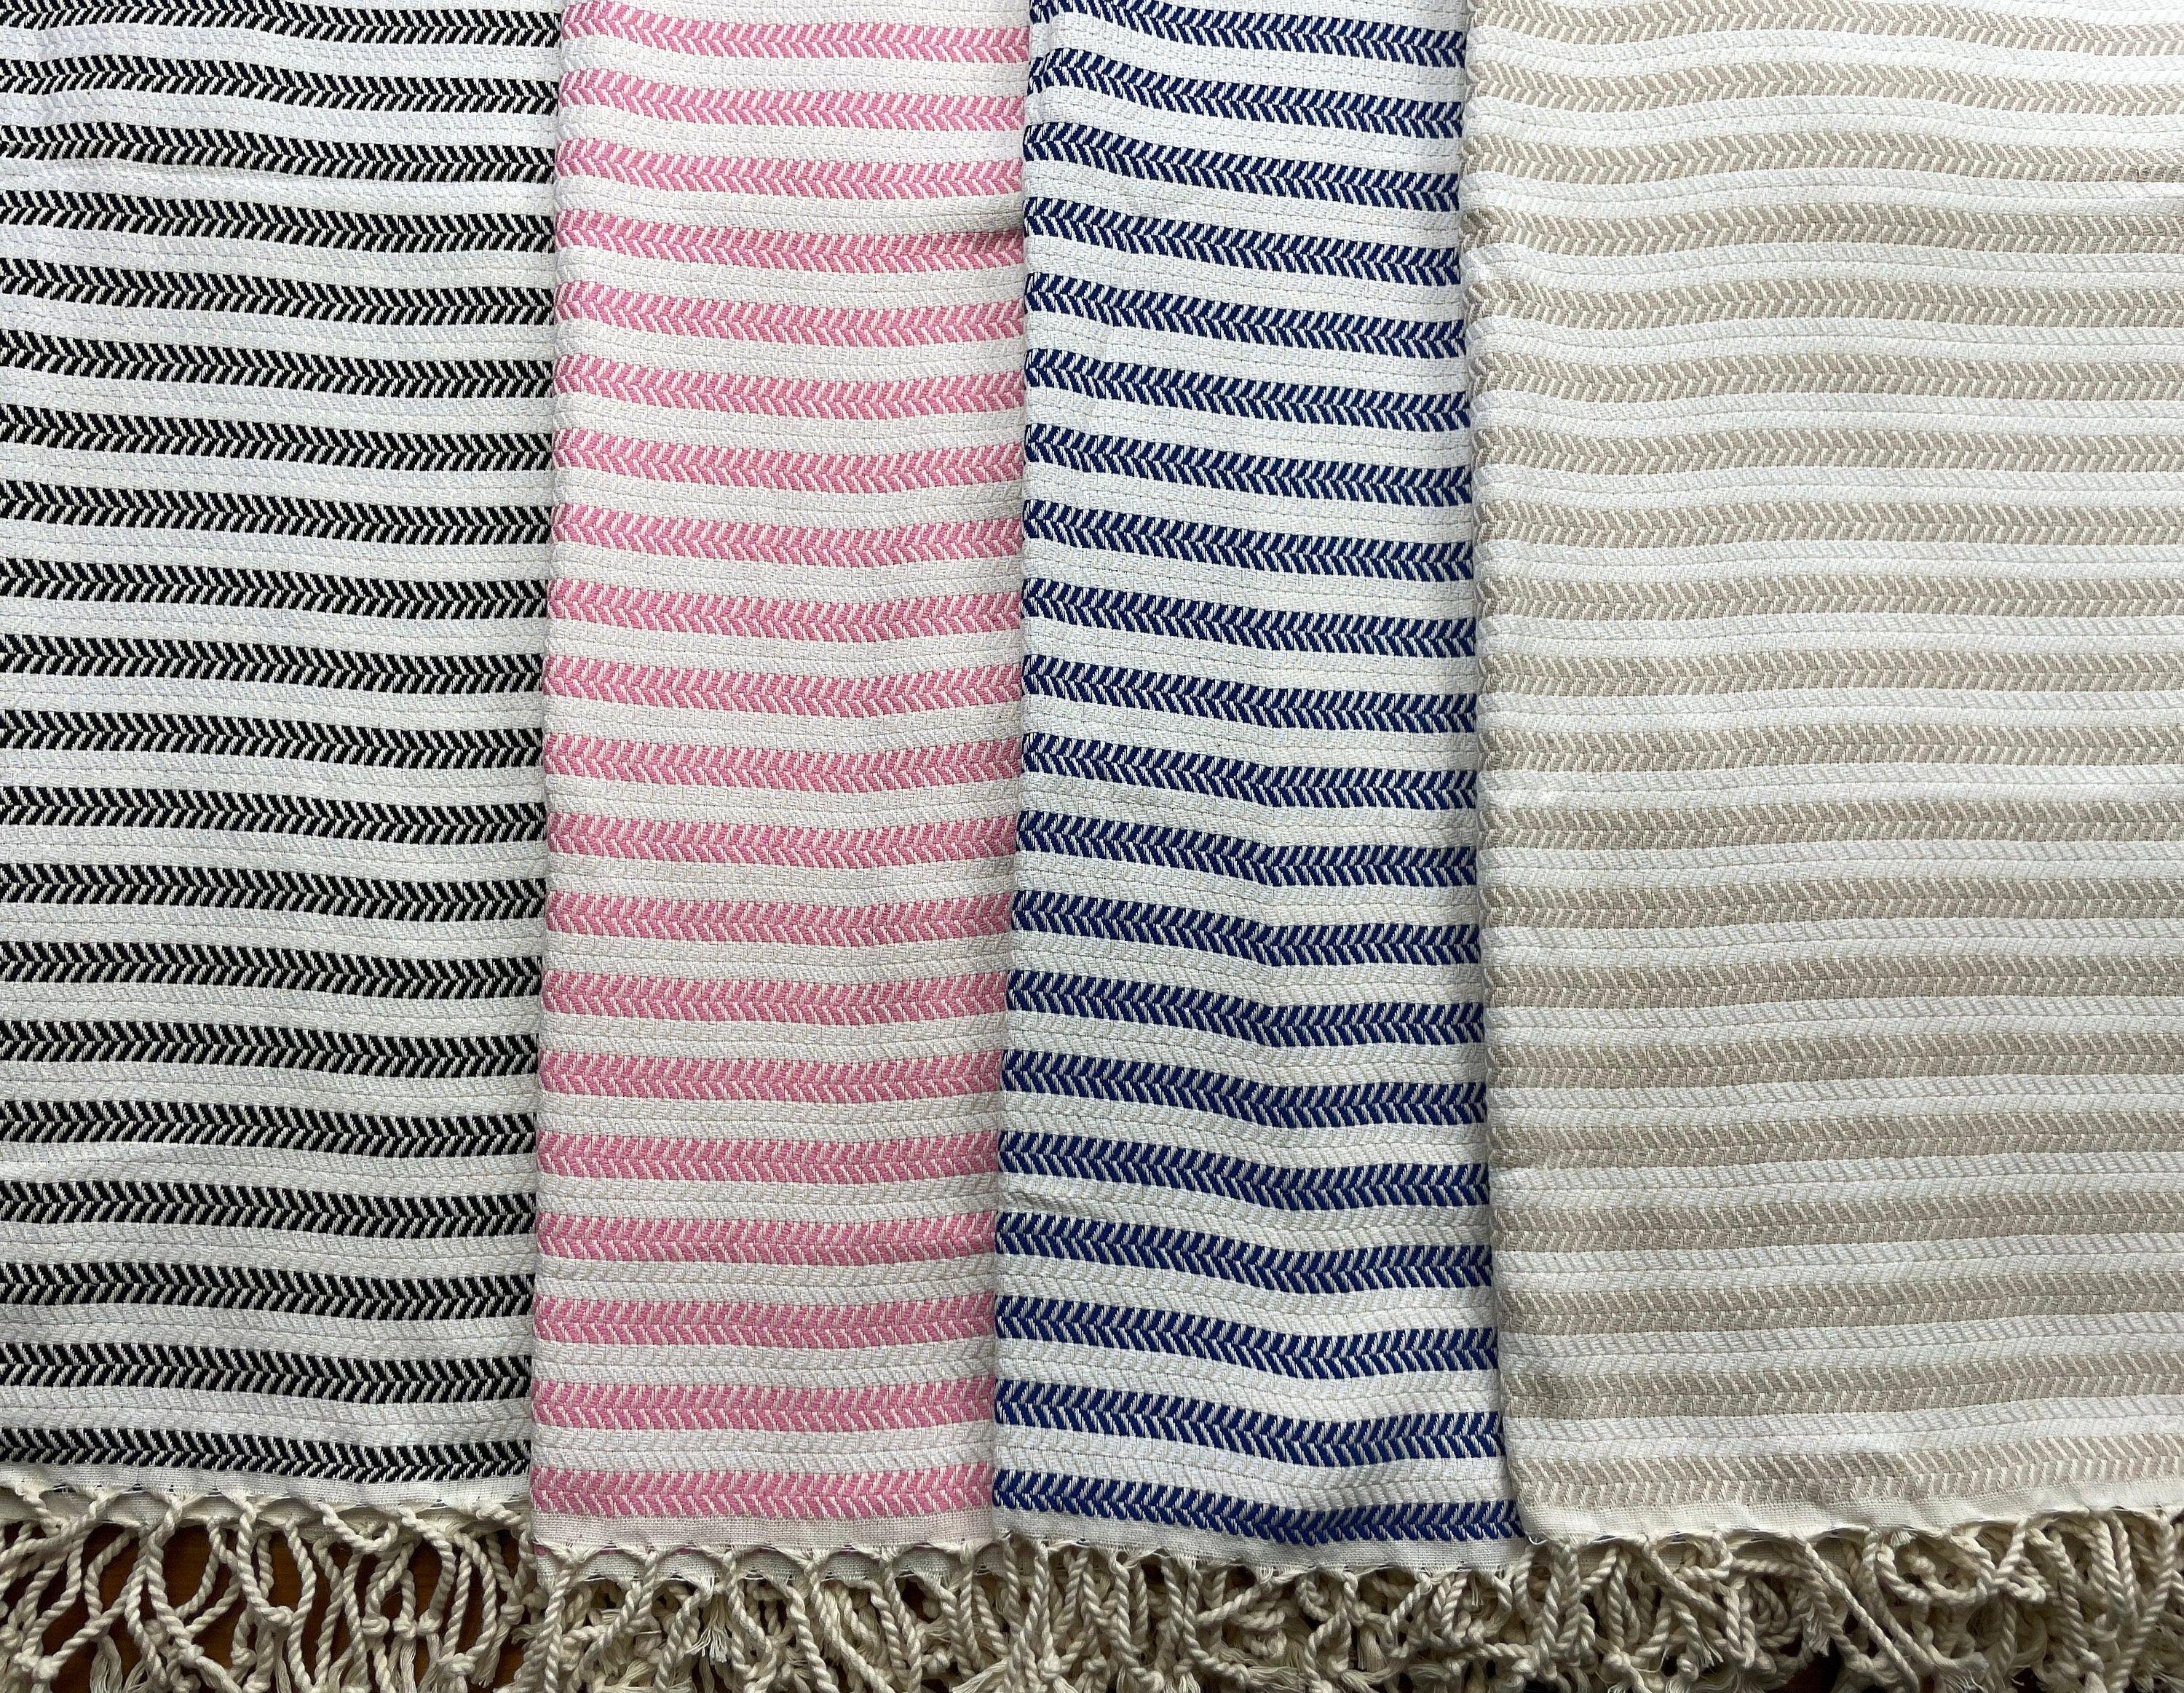 Premium Turkish Peshtemal Towel, Turkish Bath Towel, Cotton Bath Towel, 100% Cotton Towel, Turkish Towel Beach, Striped Peshtemal, Holiday Towels available at Moyoni Design